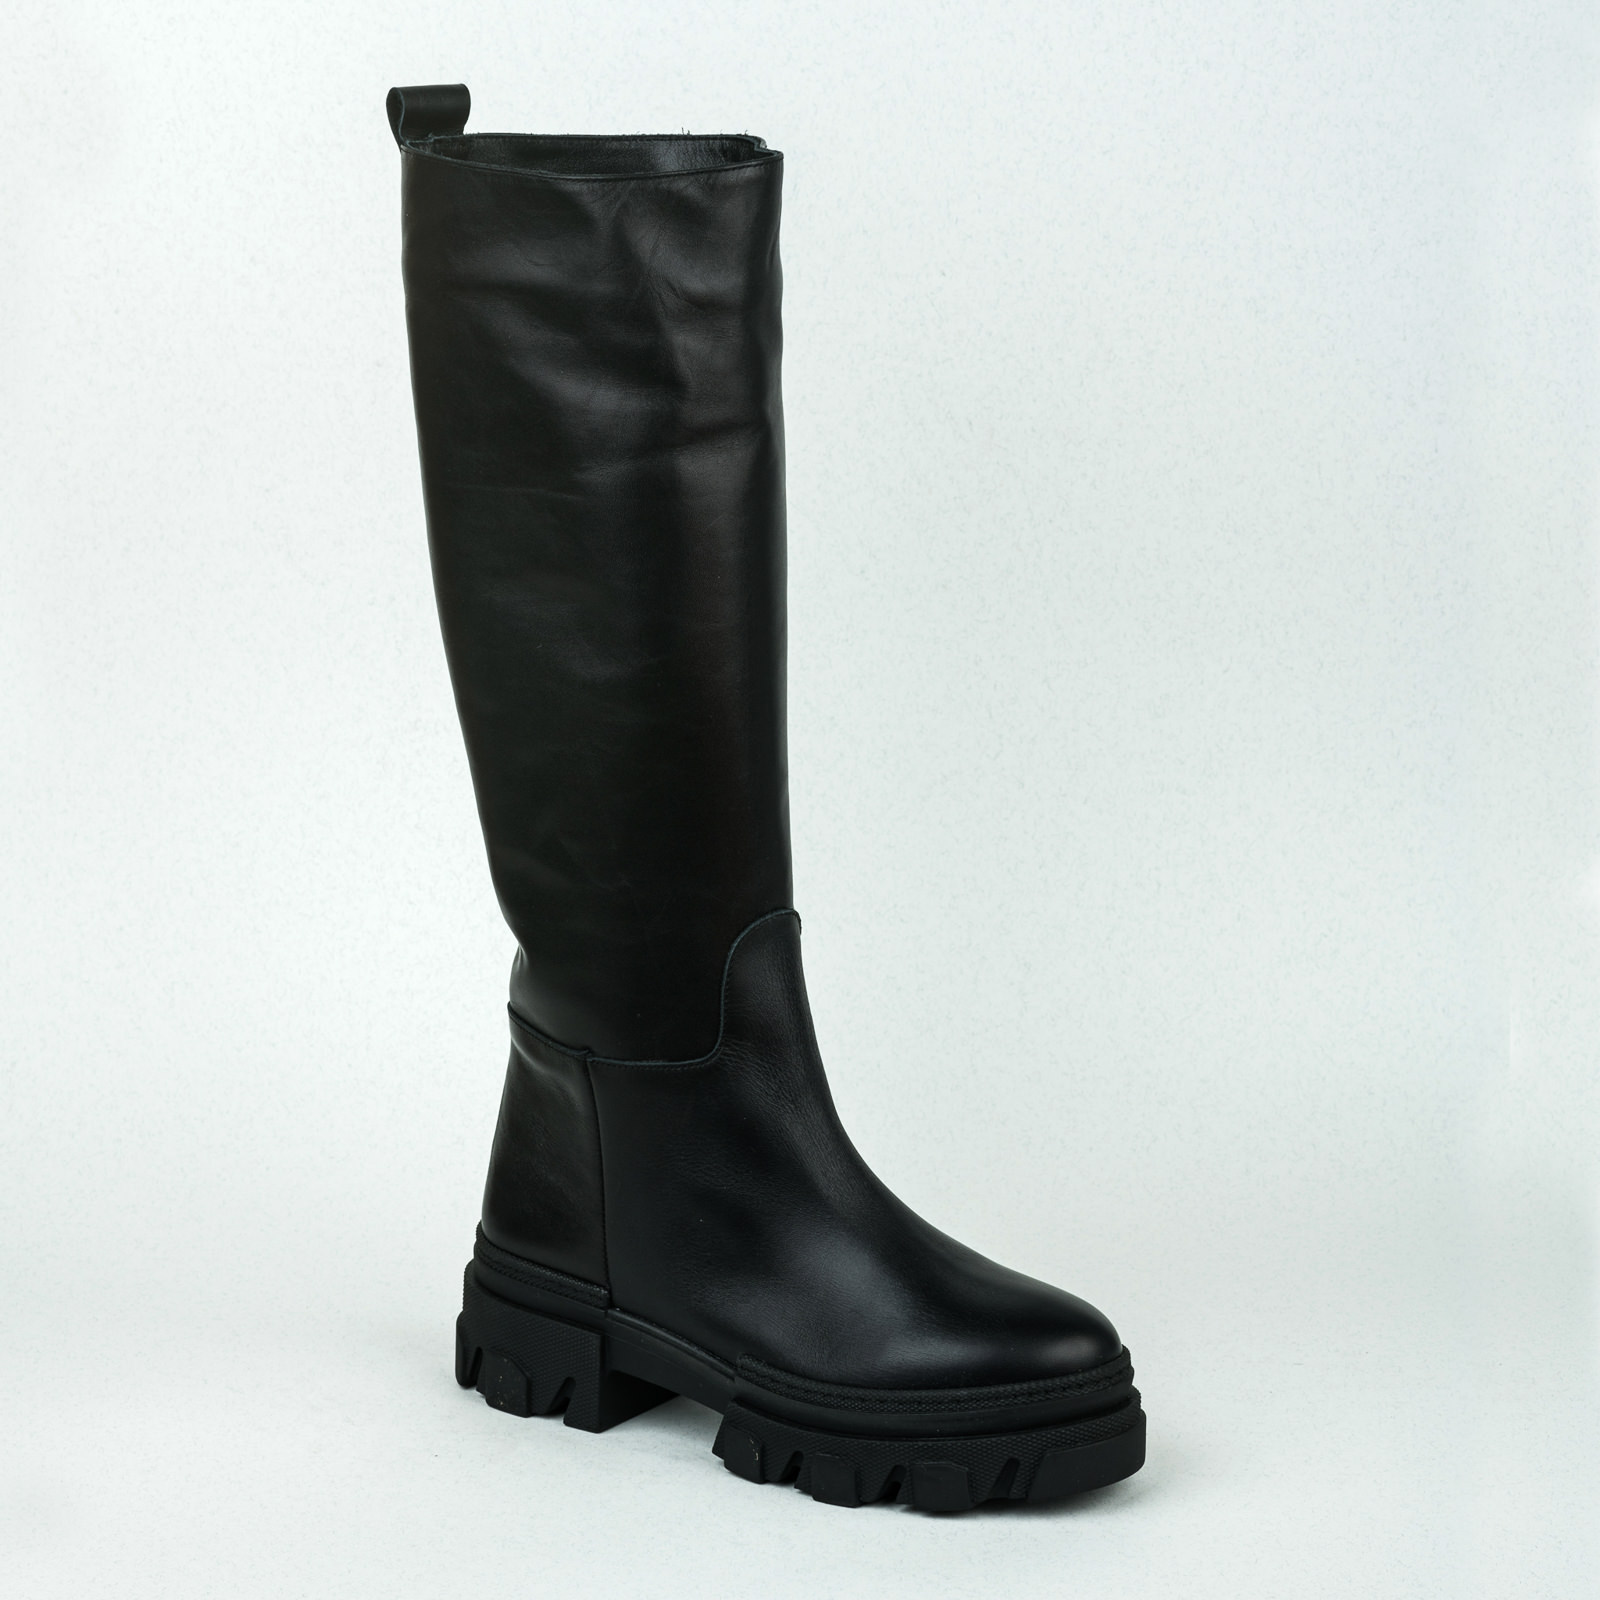 Leather WATERPROOF boots B128 - BLACK